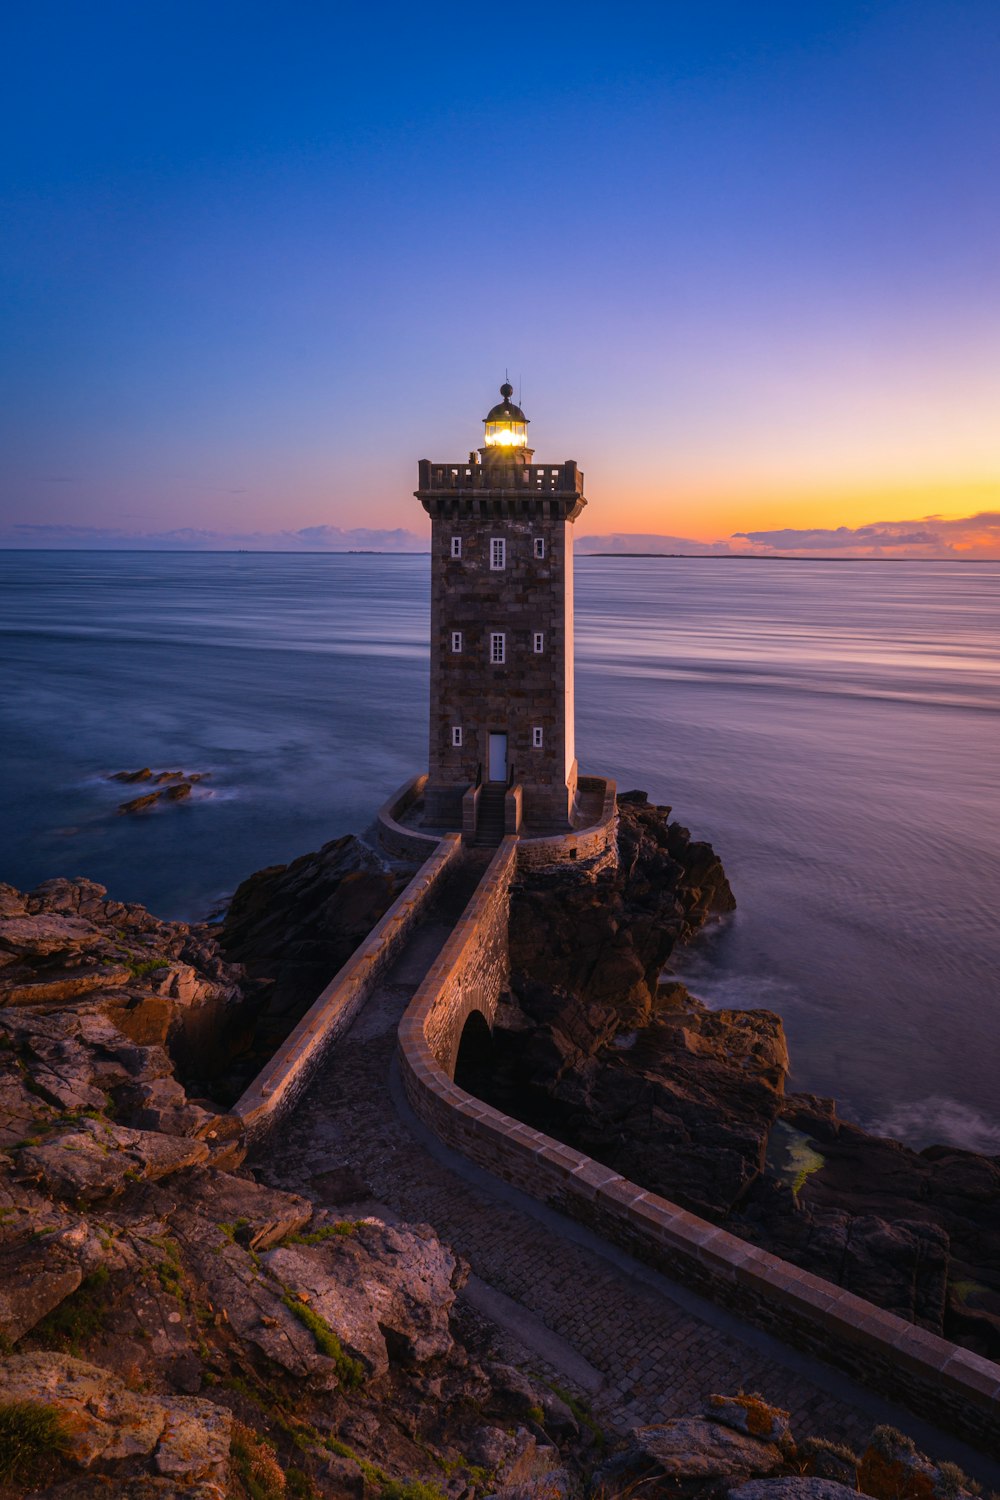 a lighthouse on a rocky cliff